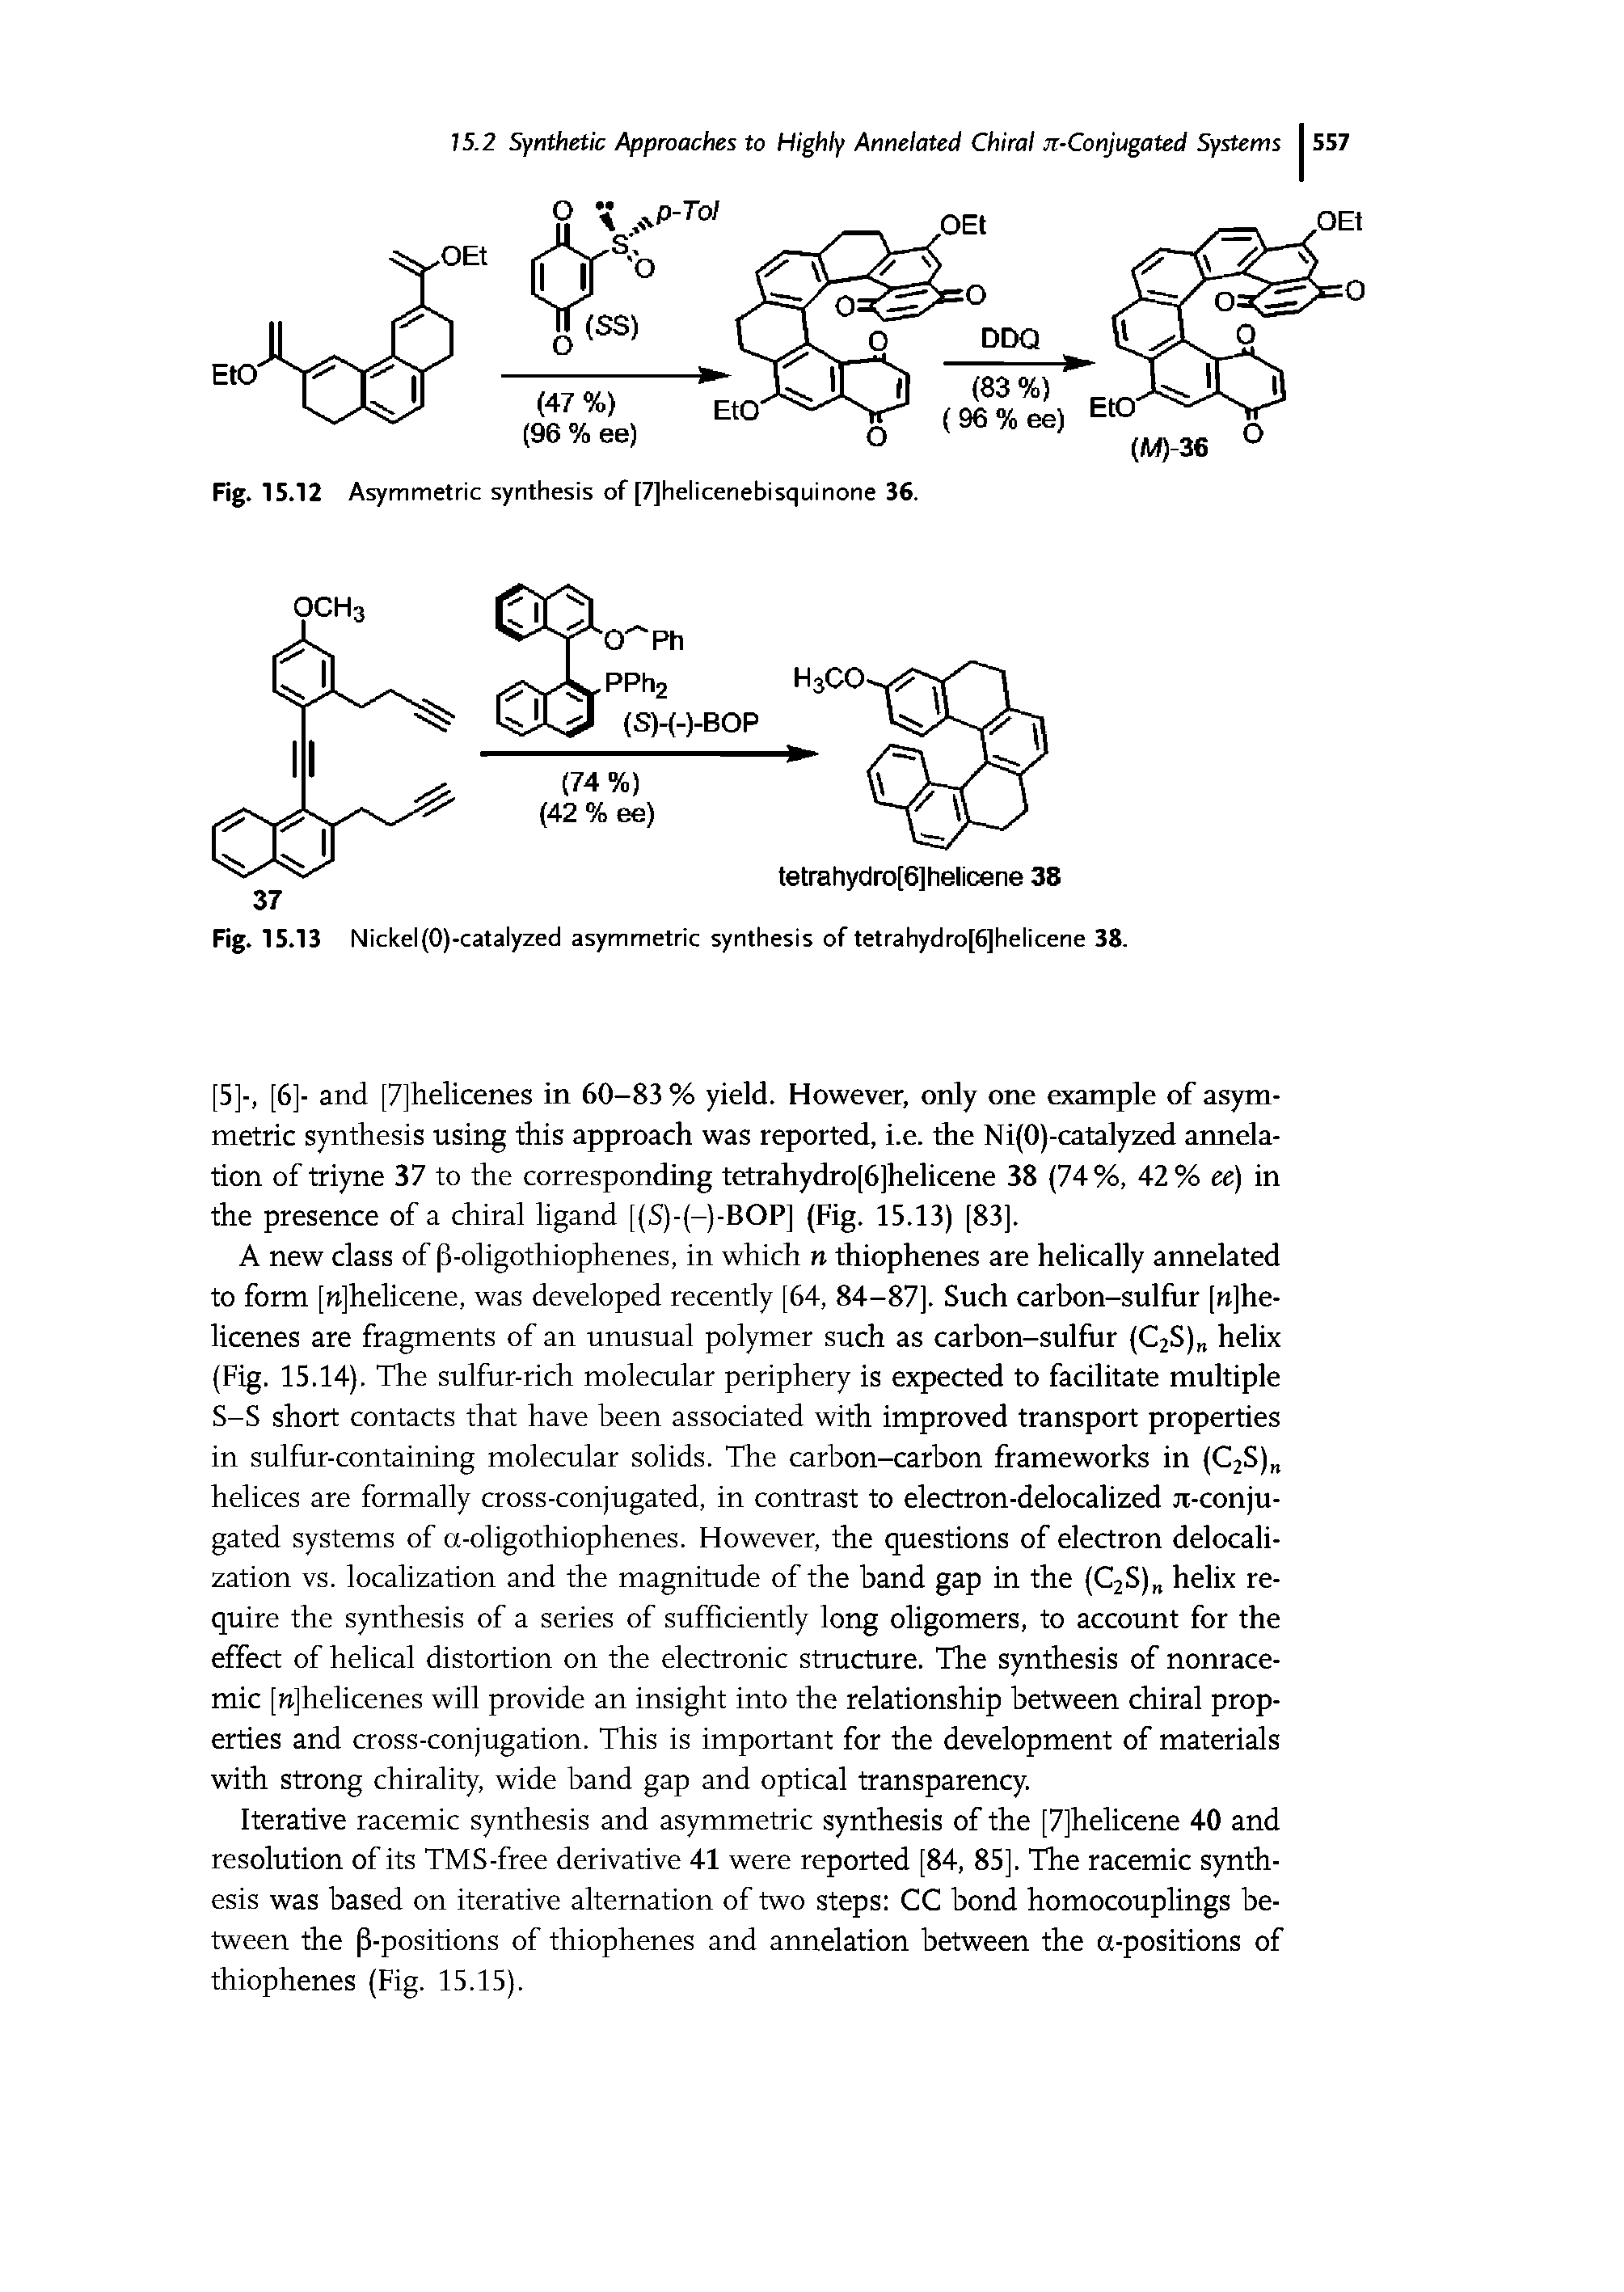 Fig. 15.13 Nickel(O)-catalyzed asymmetric synthesis of tetrahydro[6]helicene 38.